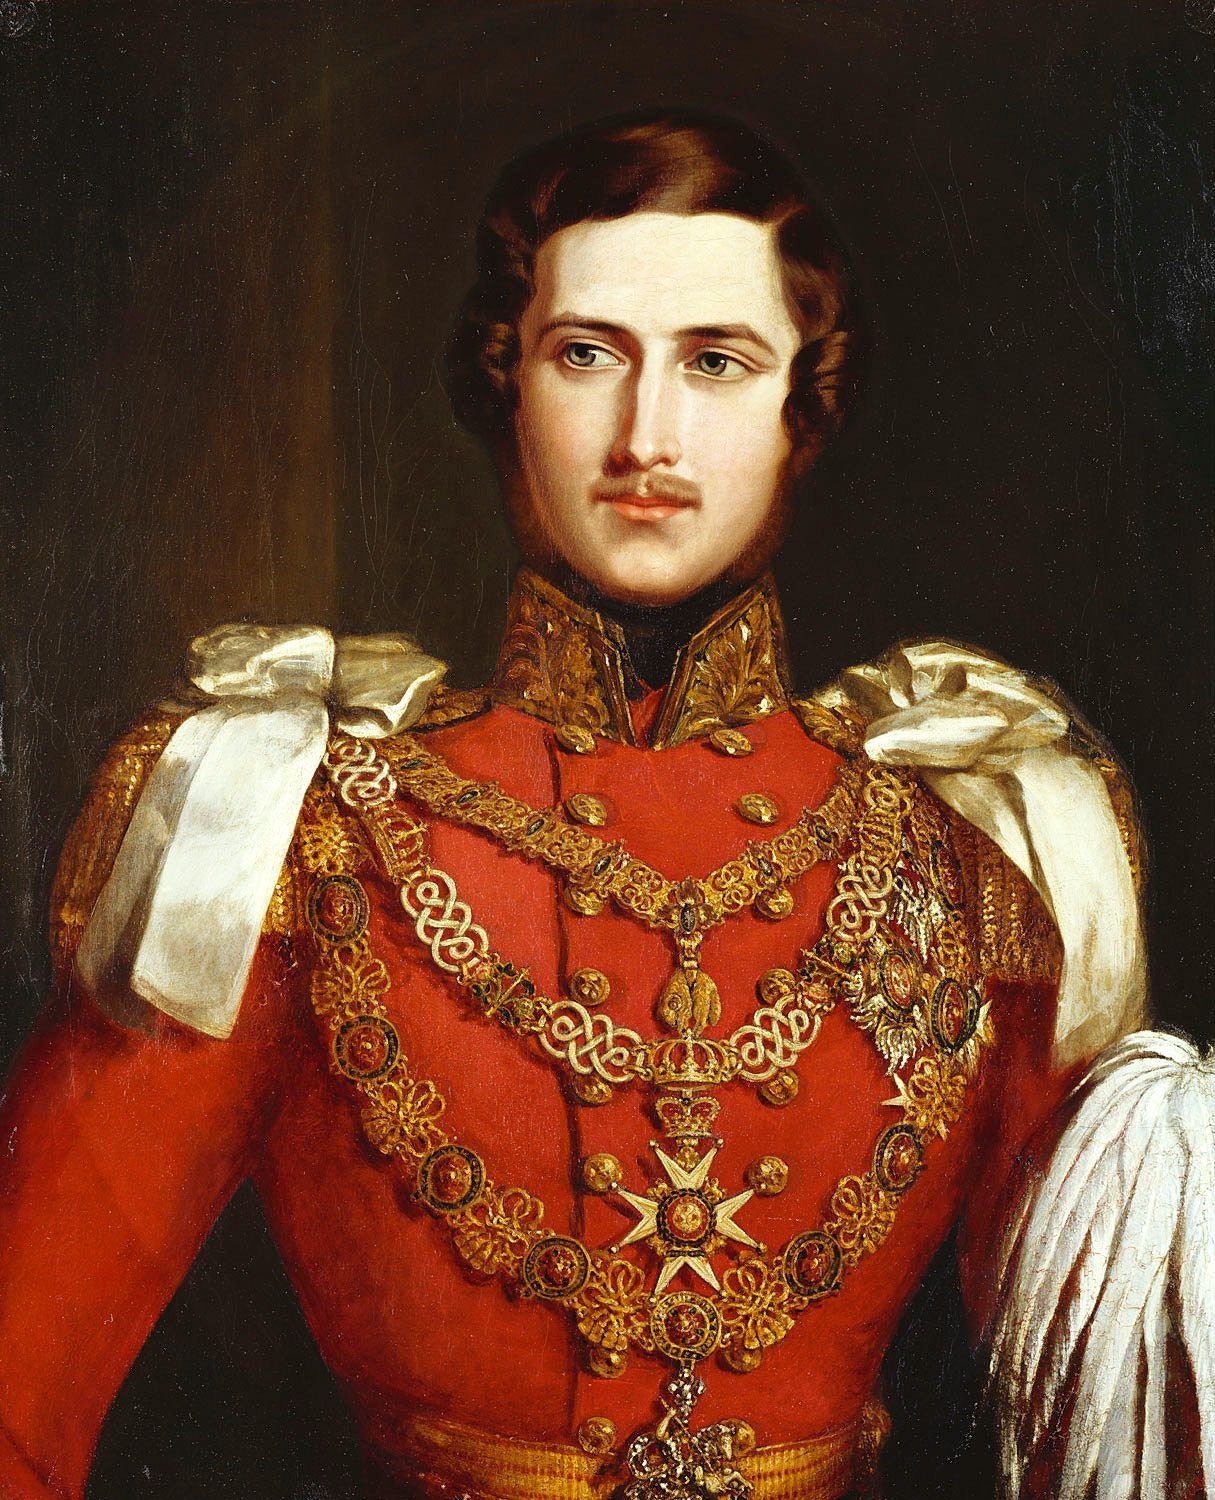 Prince Consort Albert